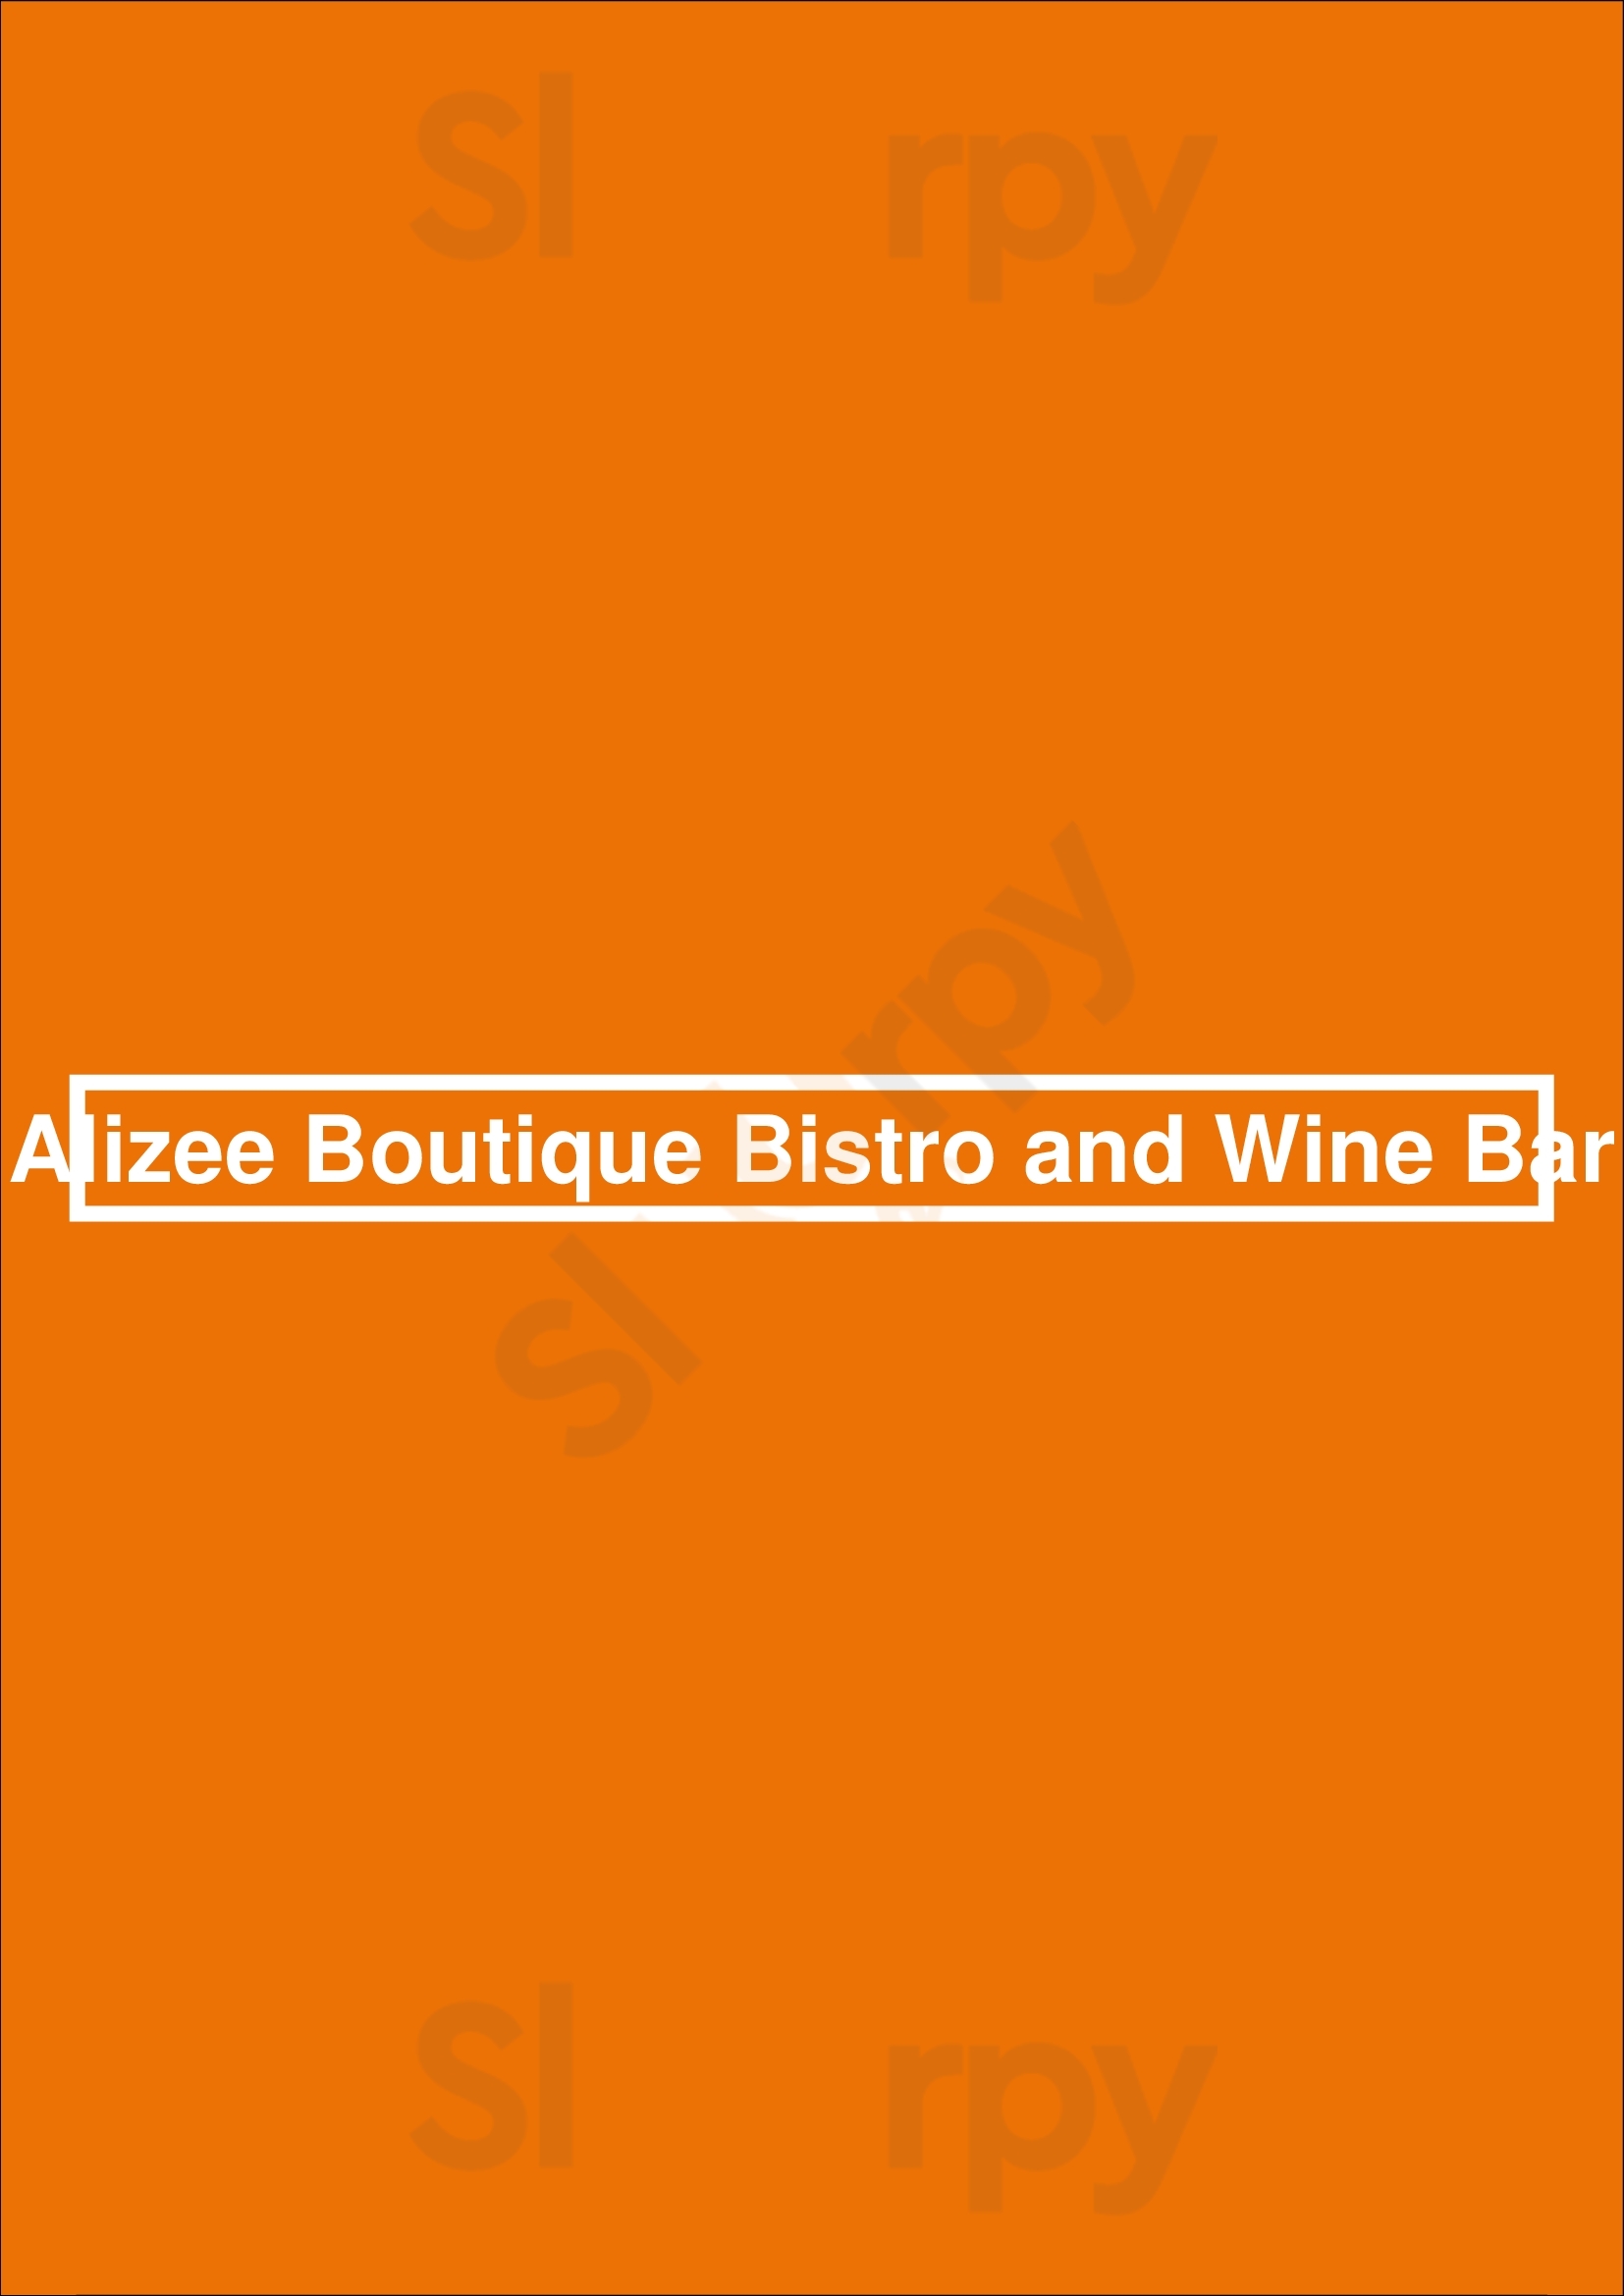 Alizee Boutique Bistro And Wine Bar Baltimore Menu - 1